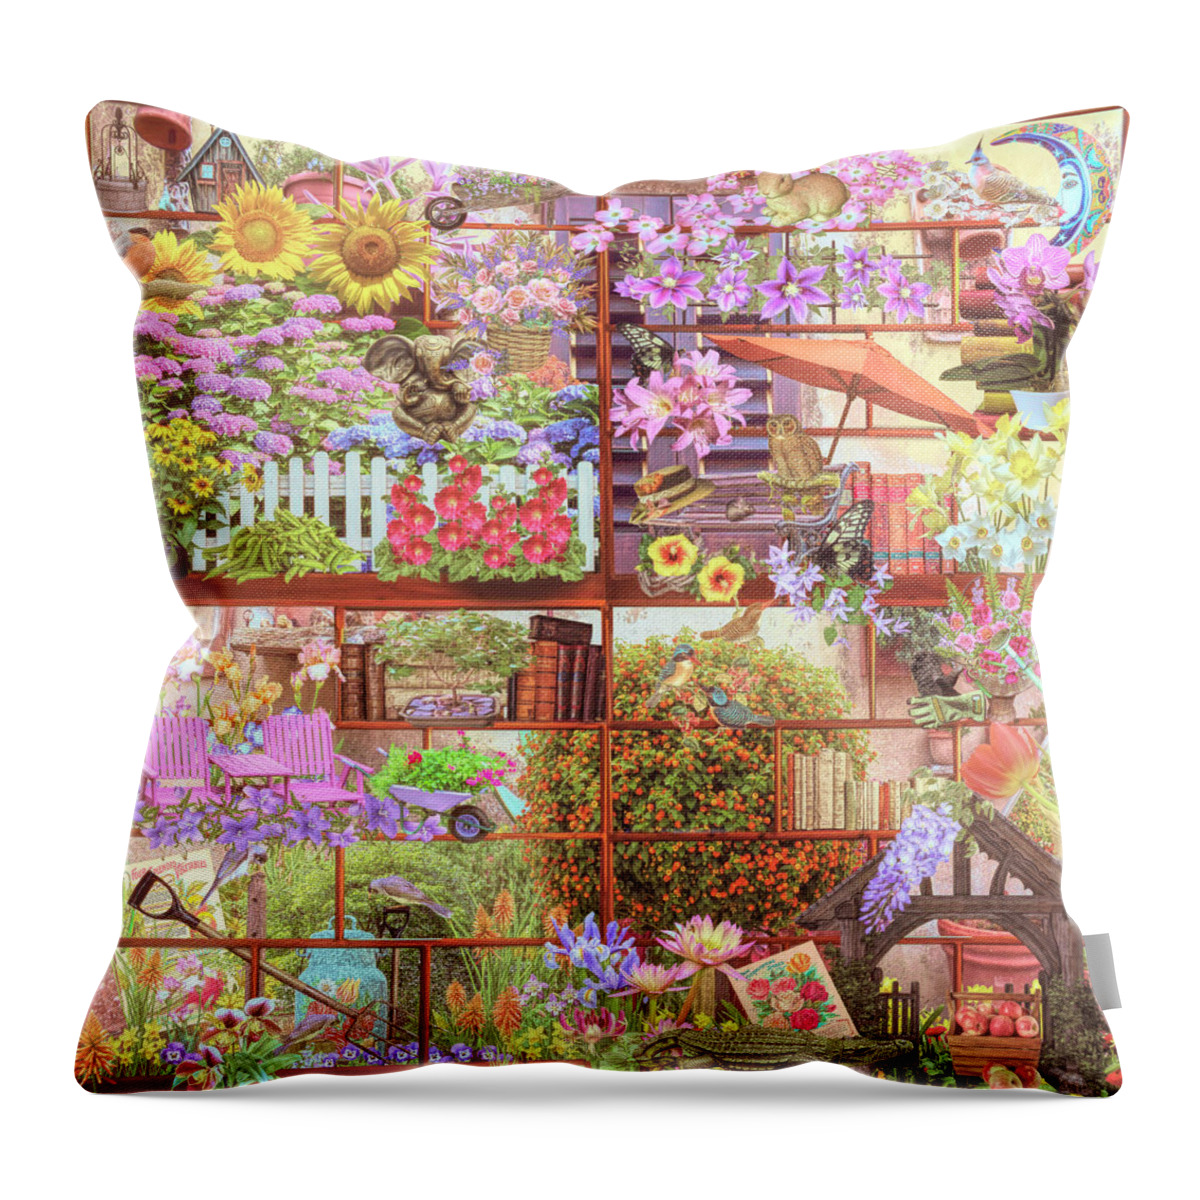 Birds Throw Pillow featuring the digital art The Pretty Happy Garden by Debra and Dave Vanderlaan